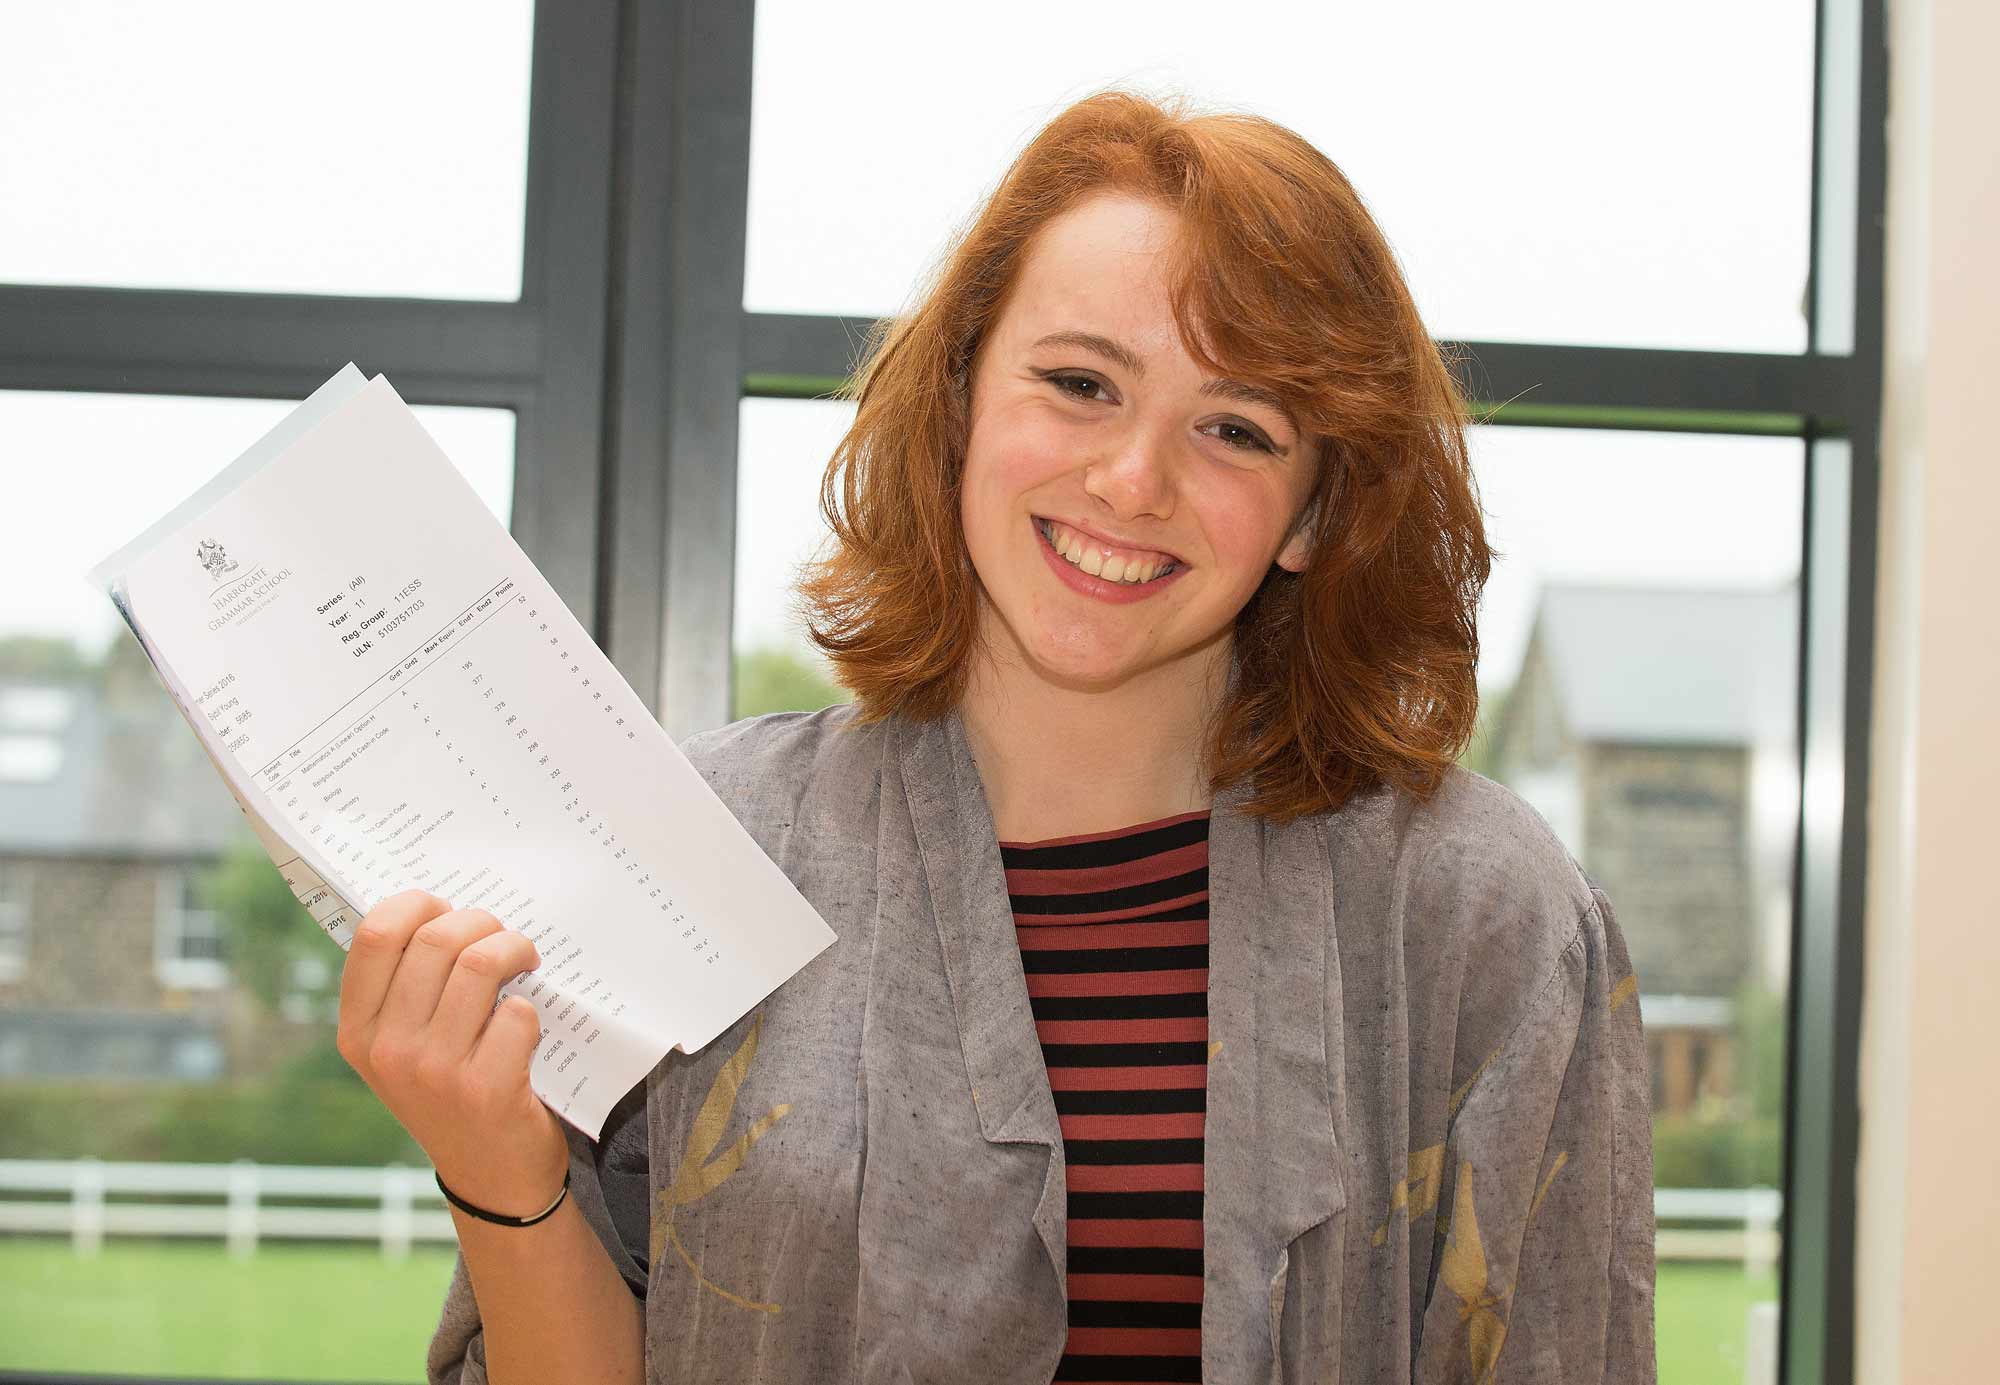 Year 11 student, Ellen Young receiving her GCSE results in 2016